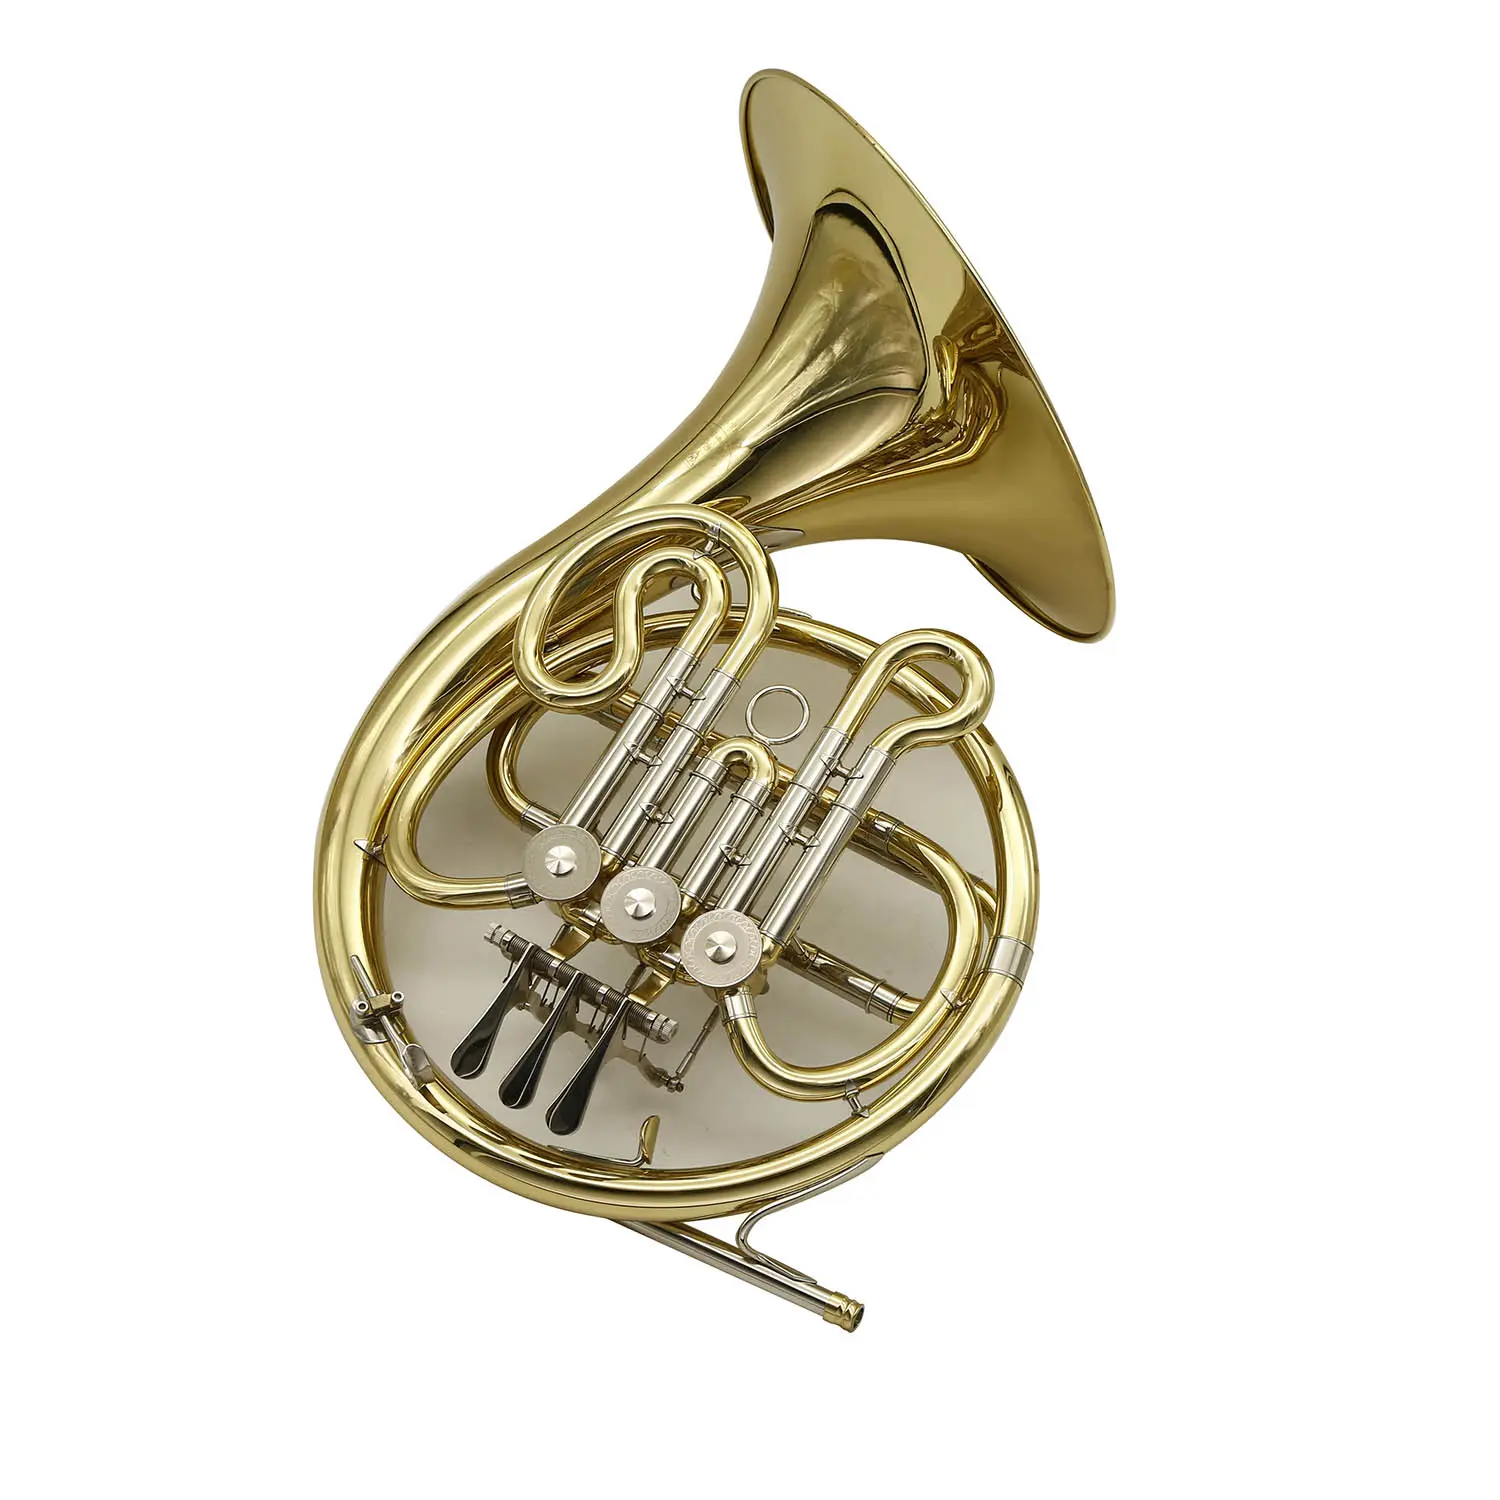 2020 Hot Sale Mini Pocket Horn French Horn Musical Instrument Suitable For Children